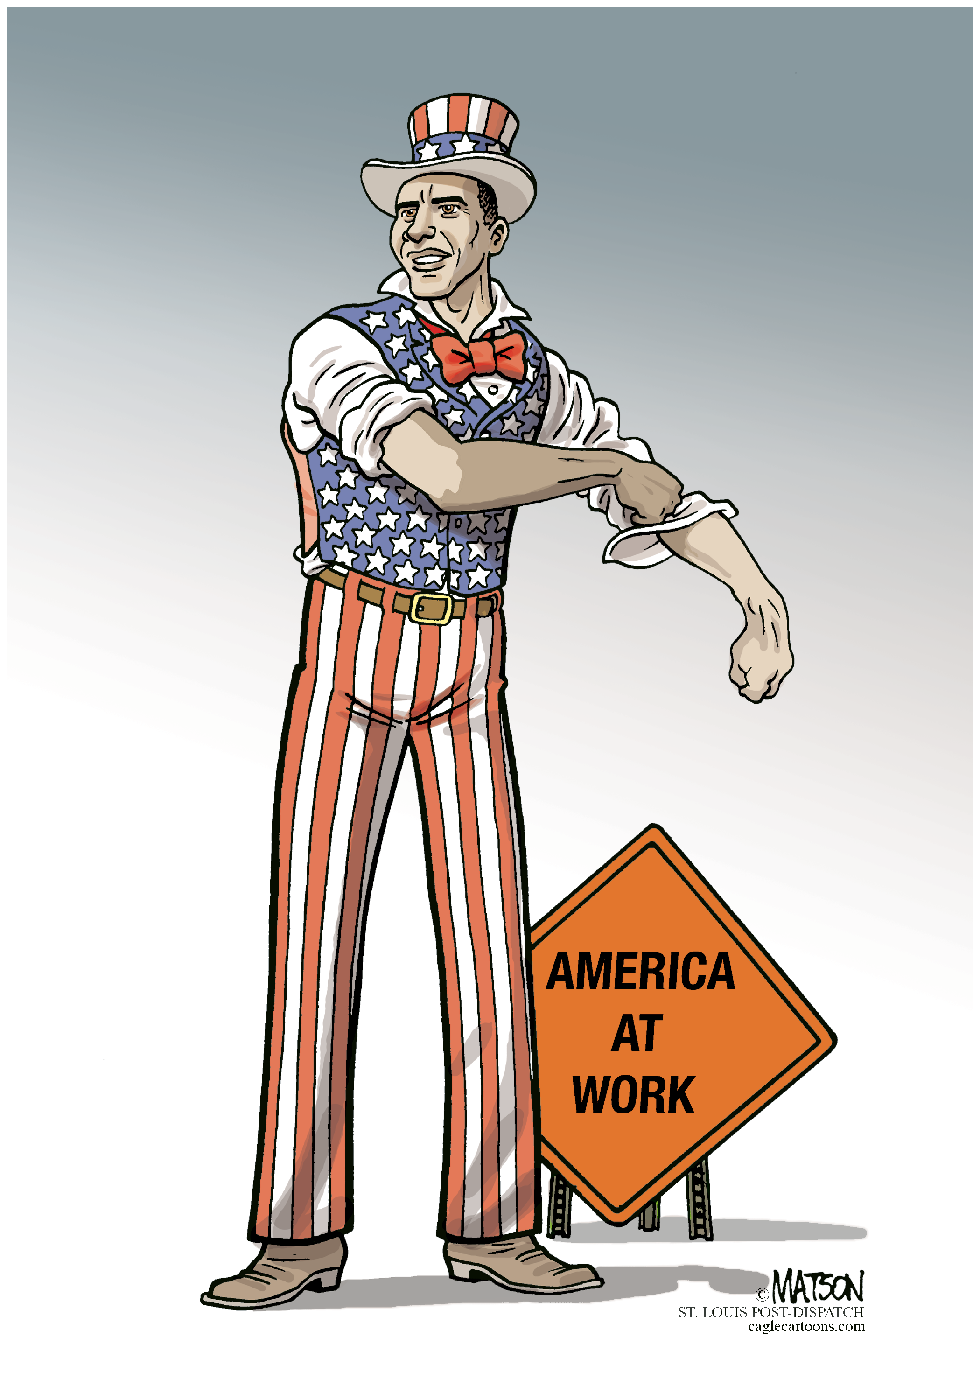 AMERICA AT WORK- by R.J. Matson